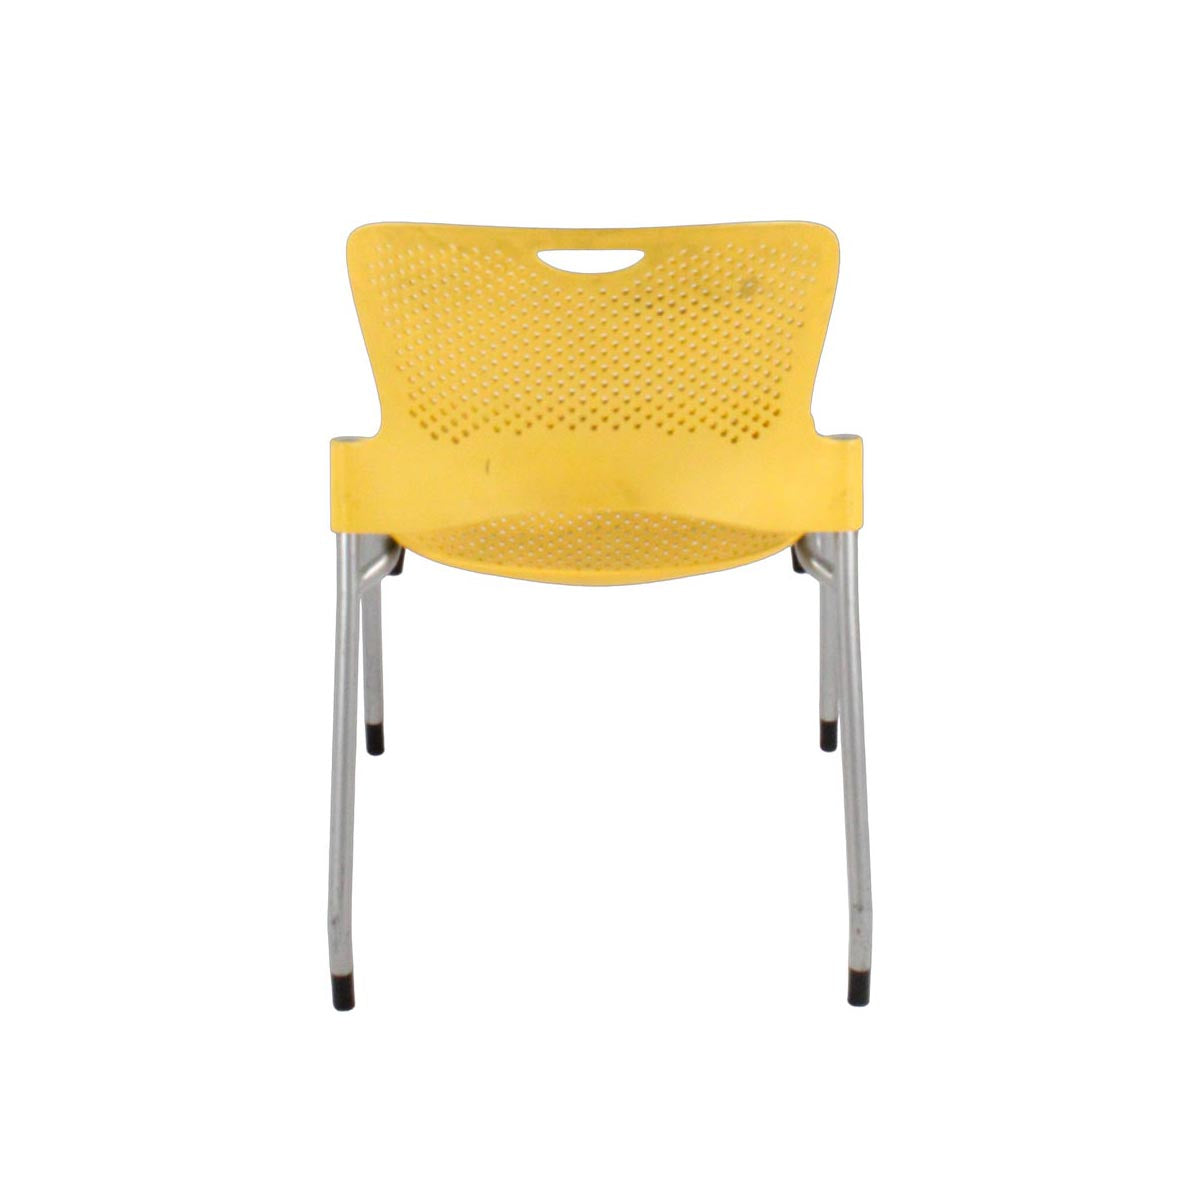 Herman Miller: Caper Chair in Gelb – generalüberholt